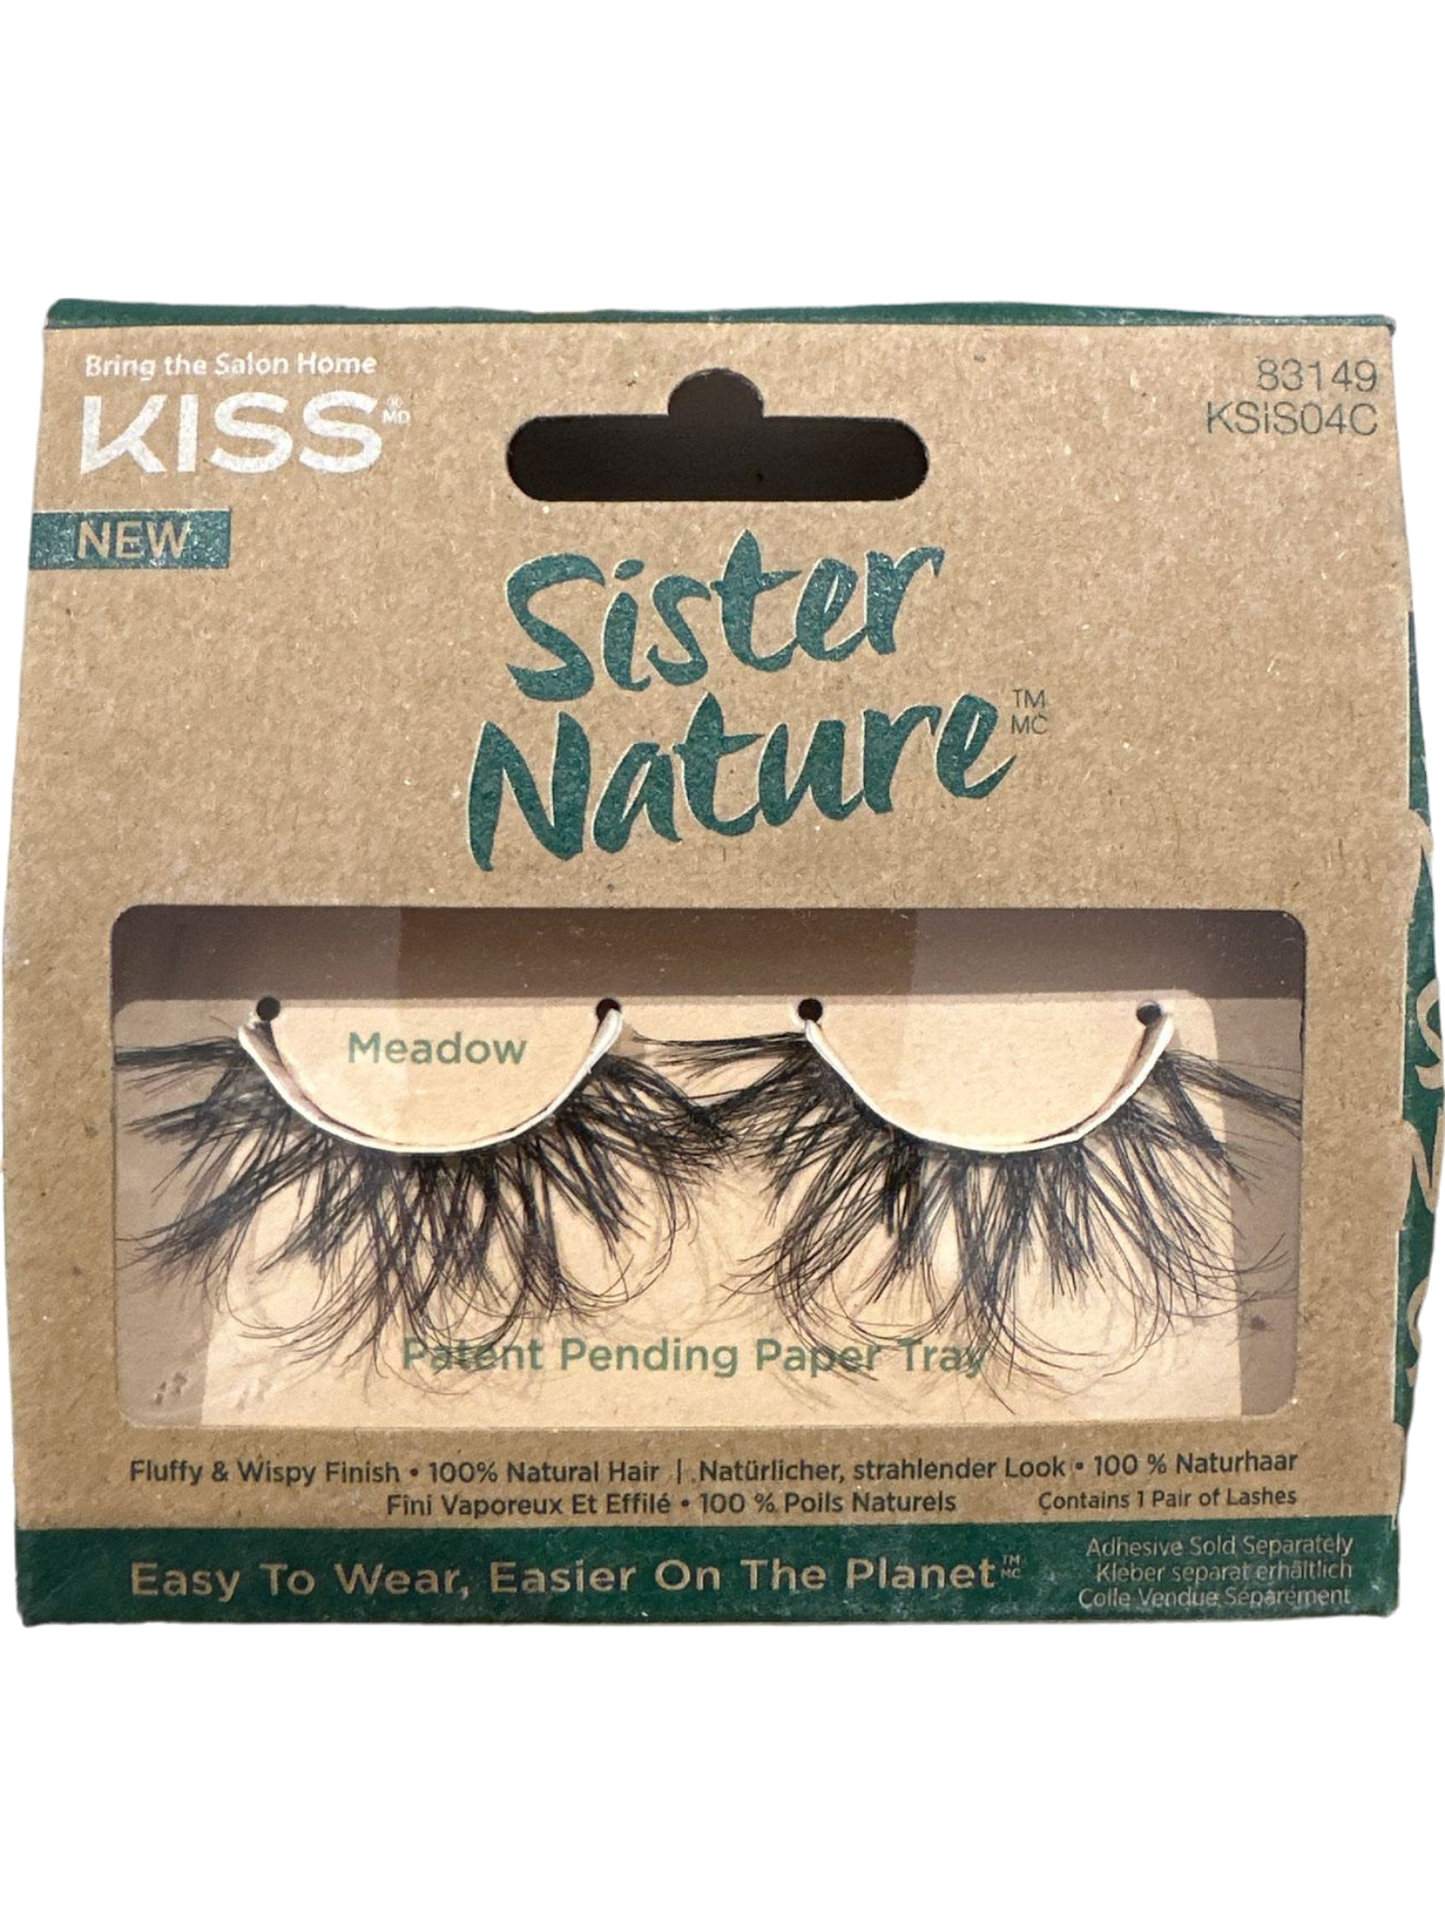 KISS Sister Nature False Eyelashes Meadow 16mm